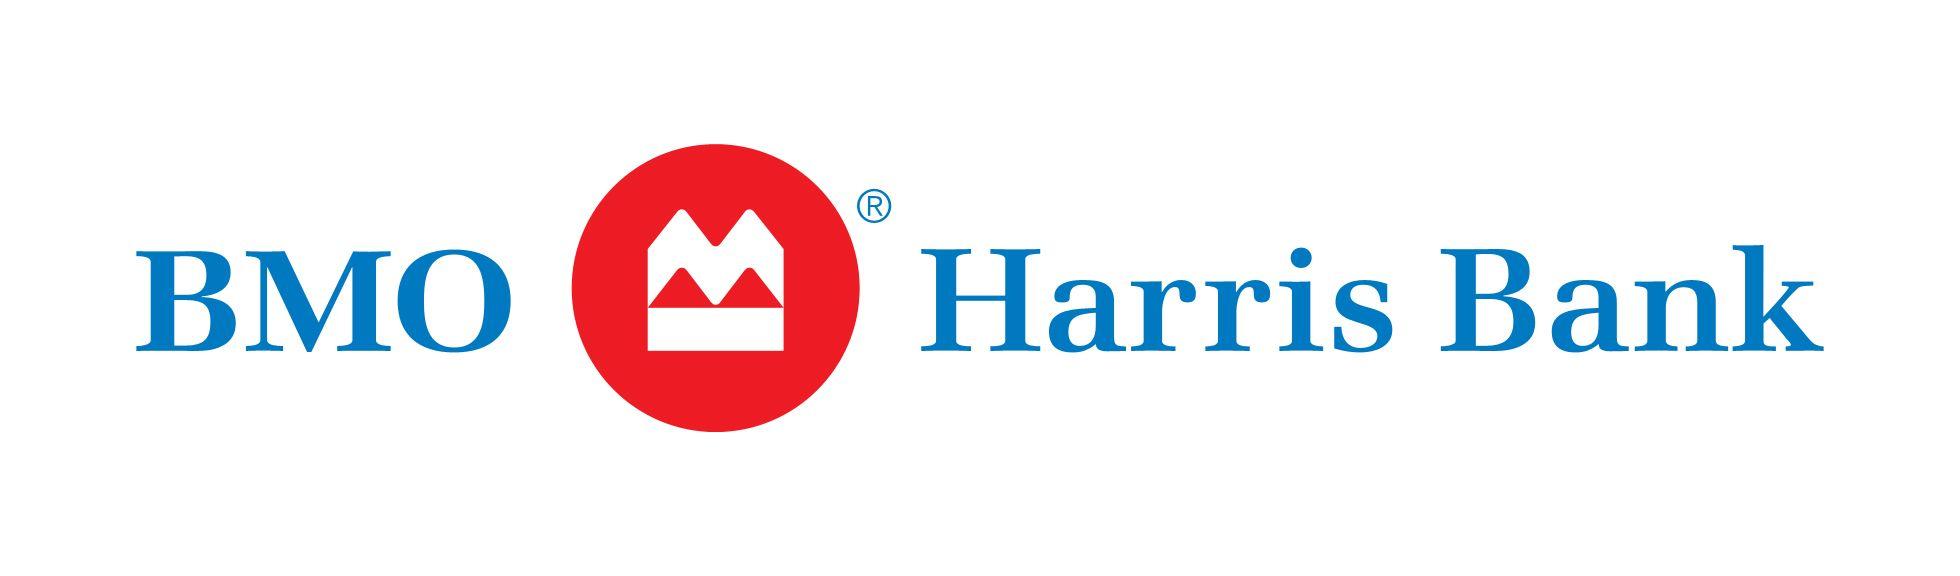 BMO Harris Logo - BMO Harris Bank Logo Color